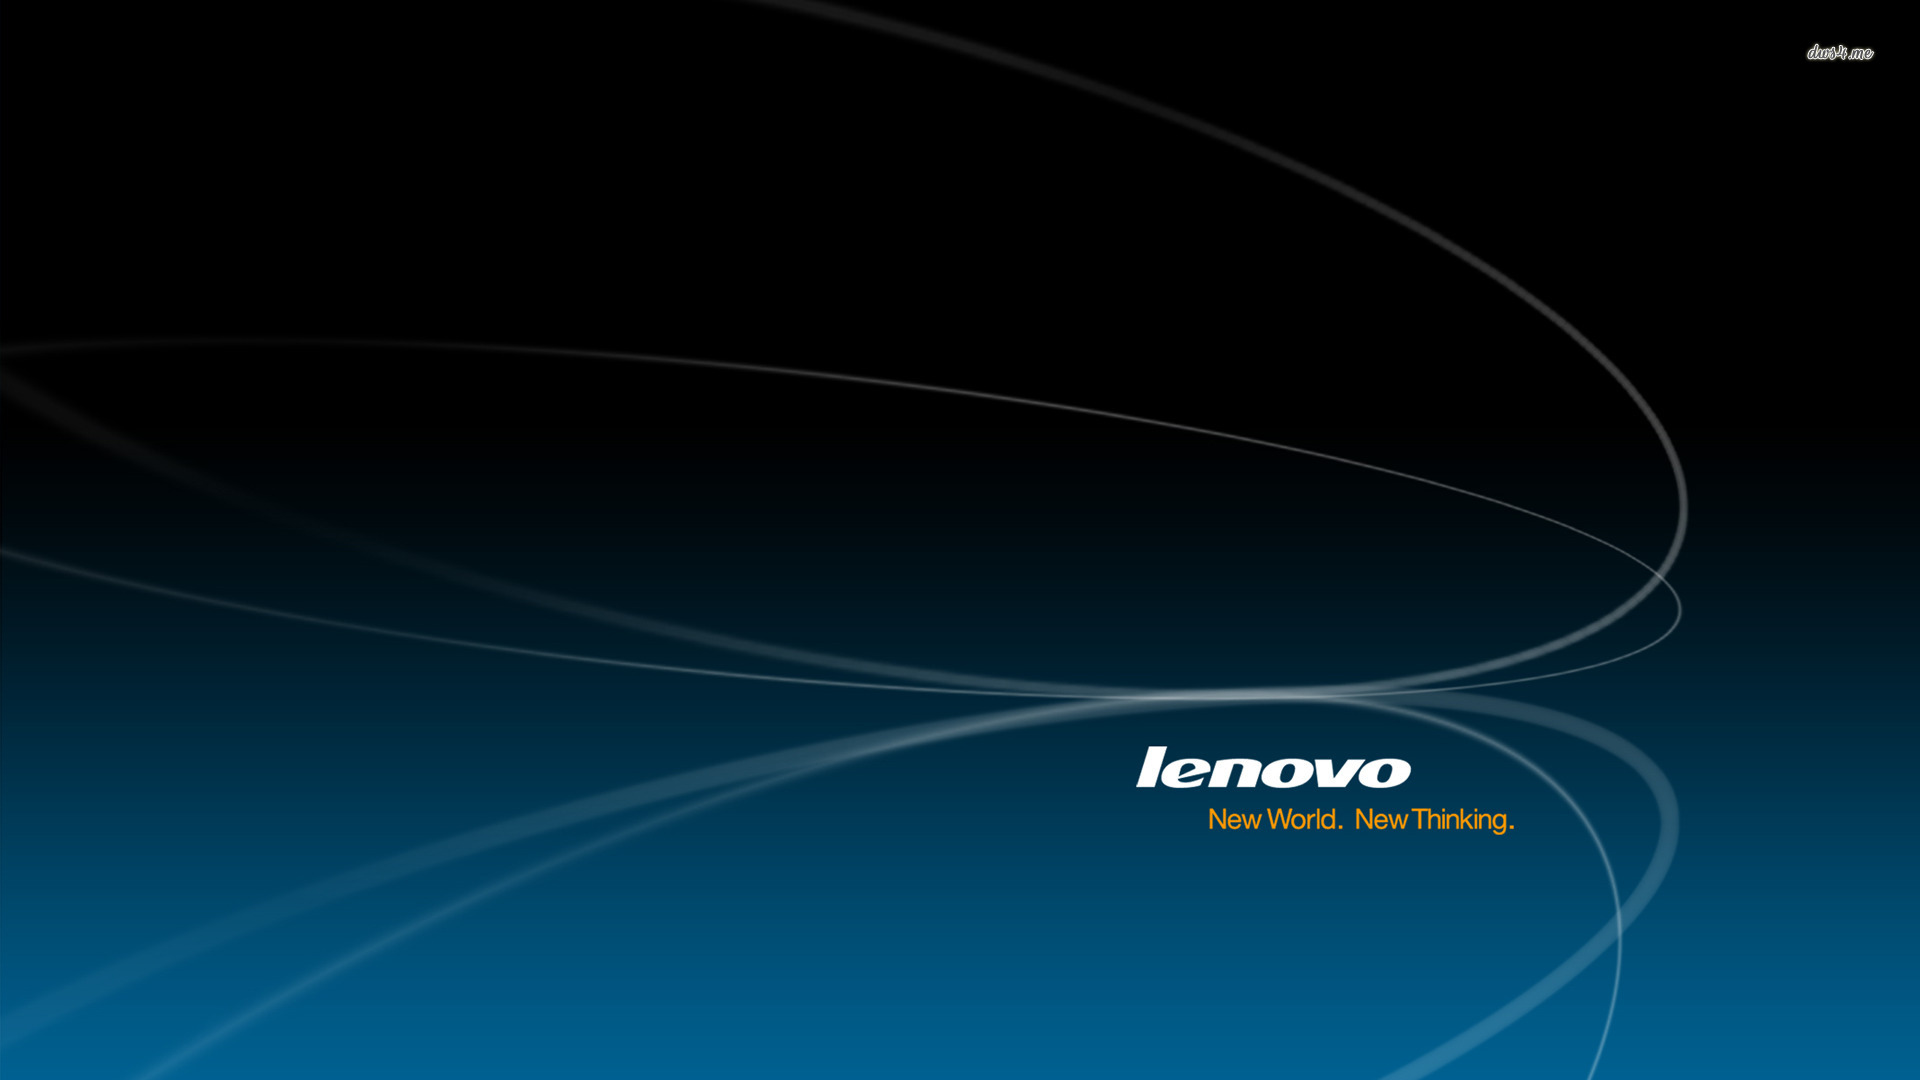 Related Wallpaper From Lenovo